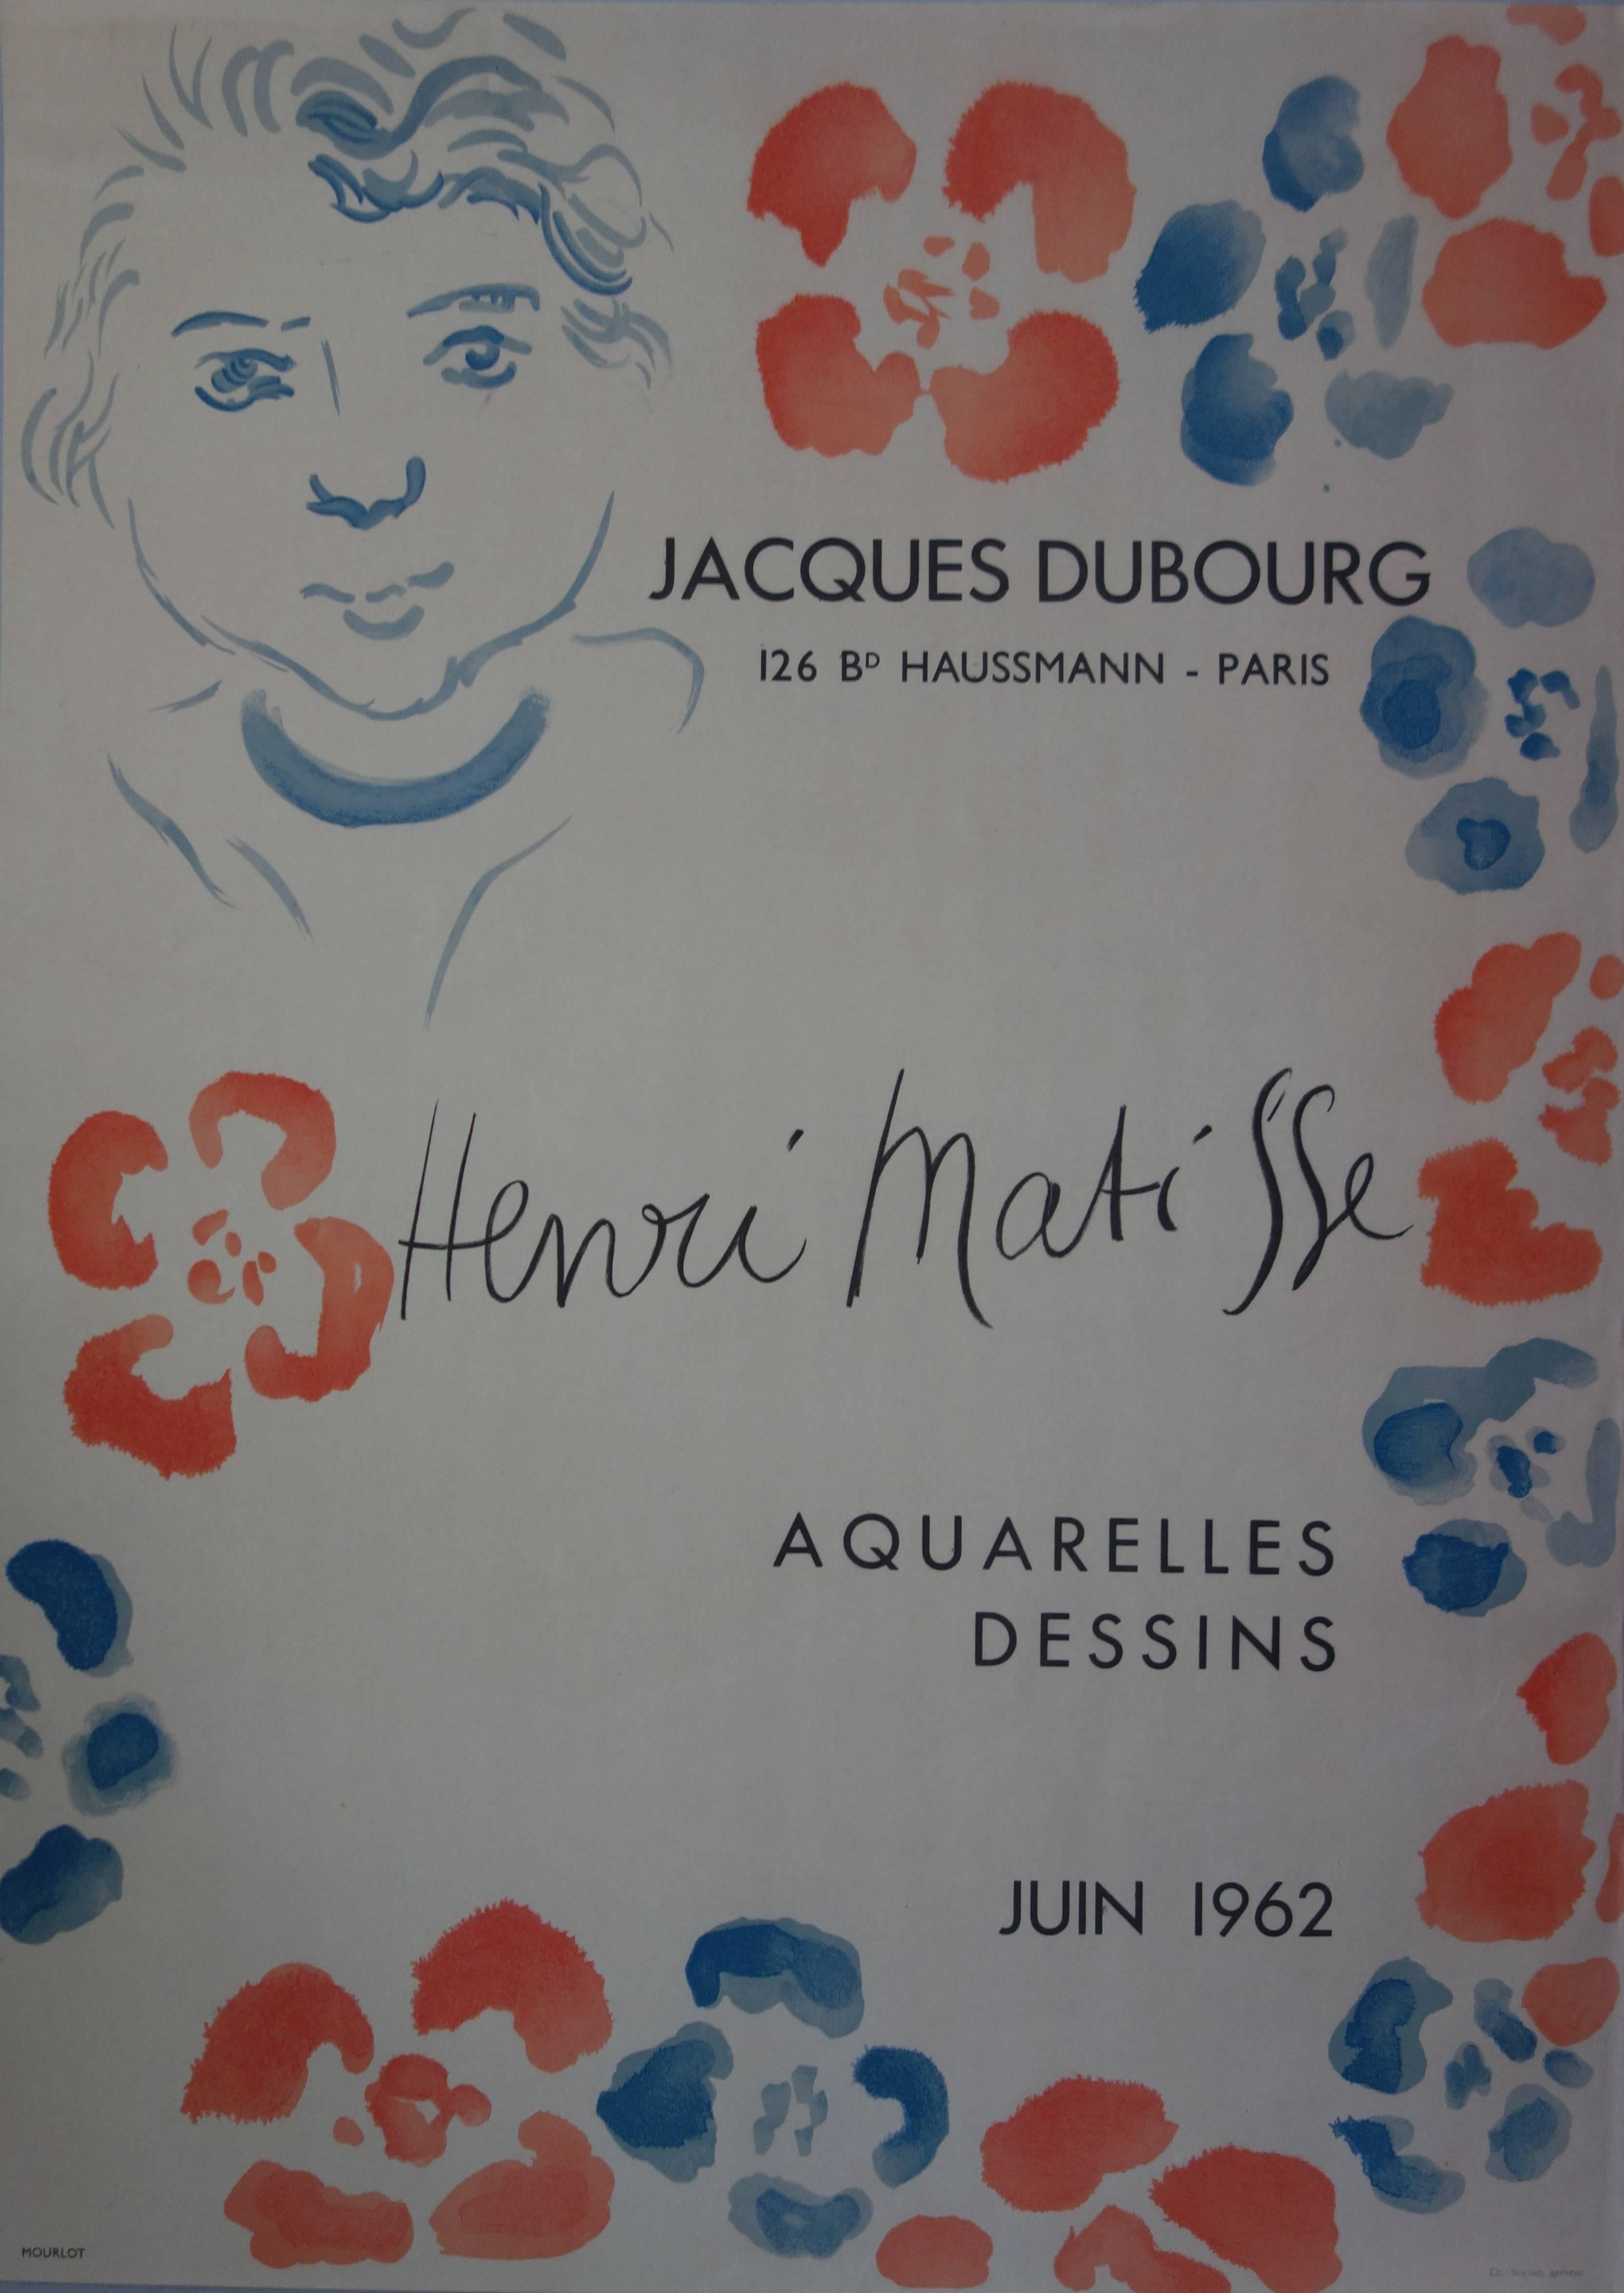 (after) Henri Matisse Figurative Print - Jacques Bubourg : Aquarelles, Dessins - Lithograph - Mourlot 1962